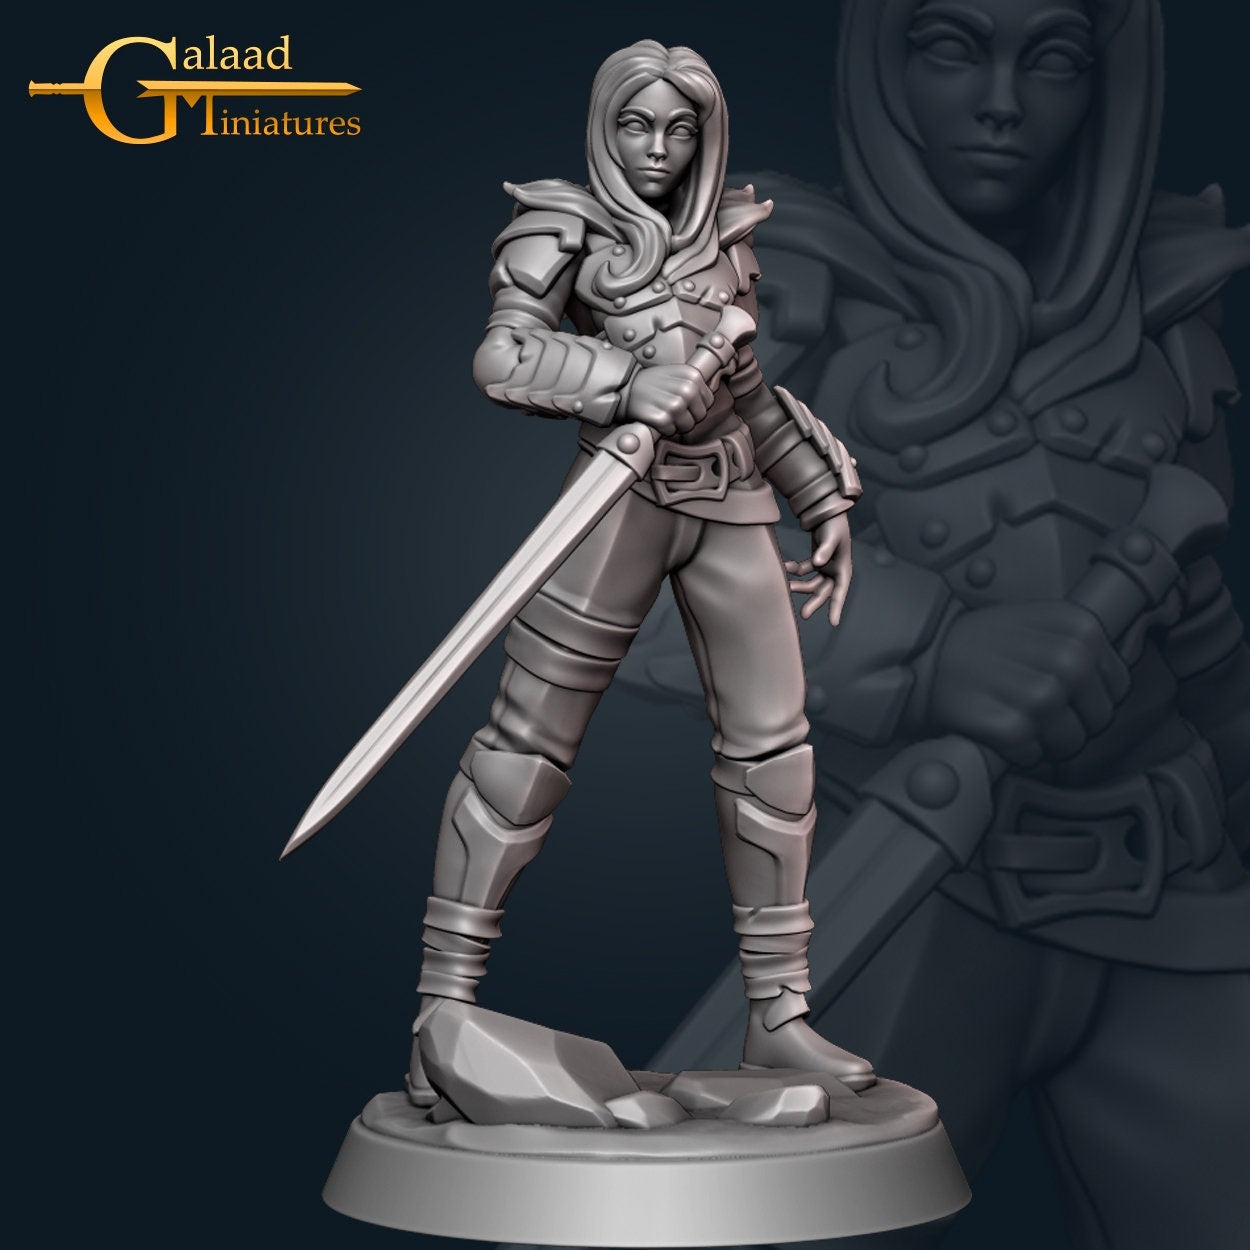 Female Human Fighter D&D miniature, by Galaad Miniatures // 3D Print on Demand / DnD / Pathfinder / RPG